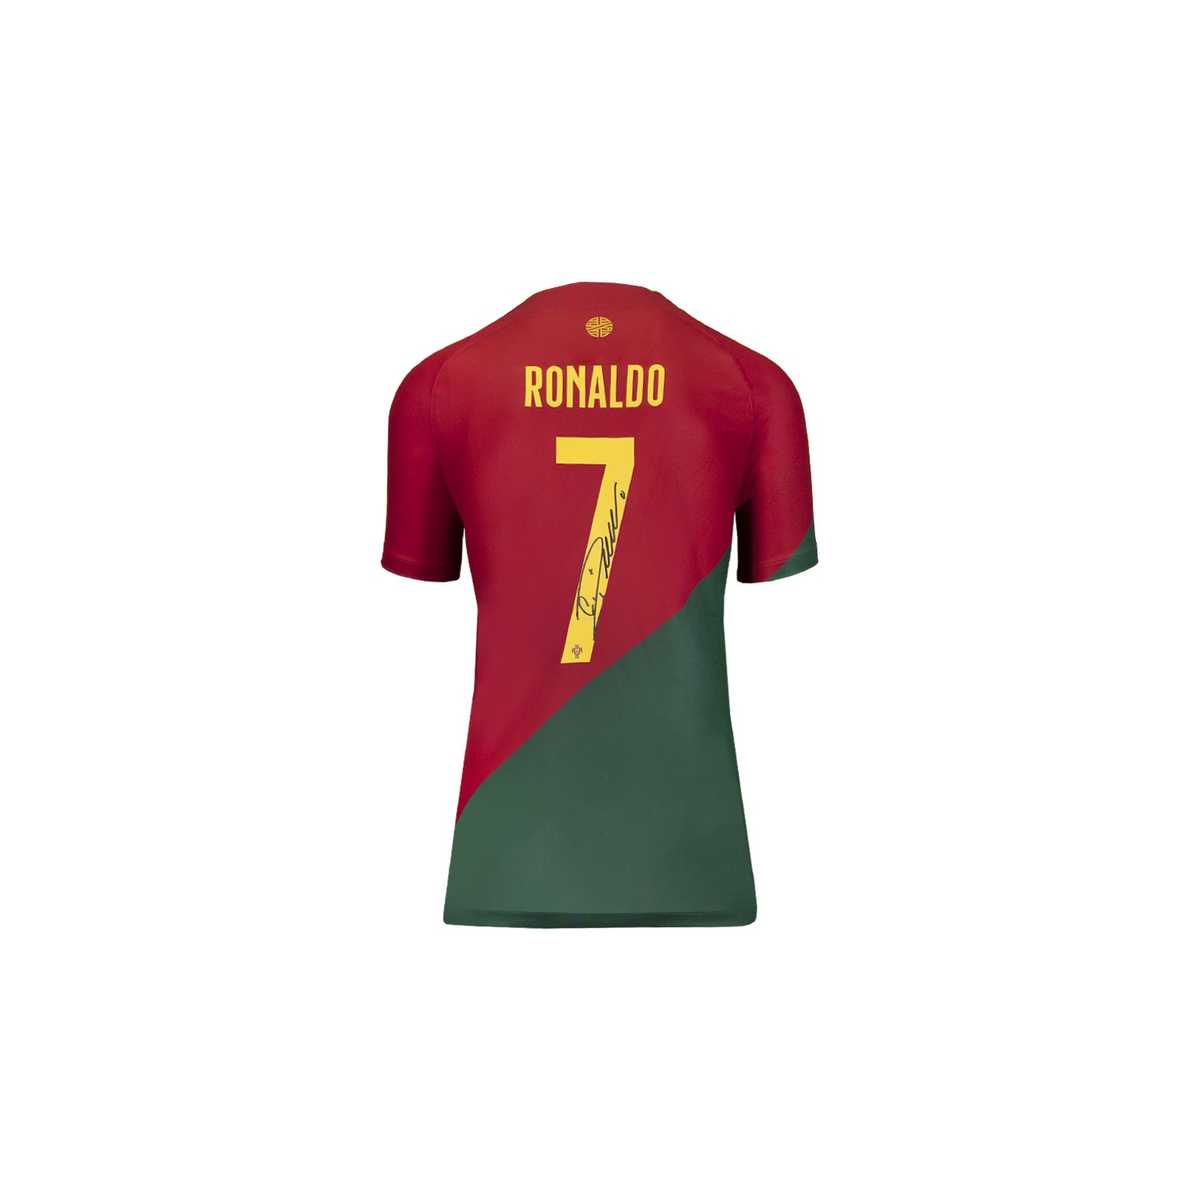 portugal world cup ronaldo jersey